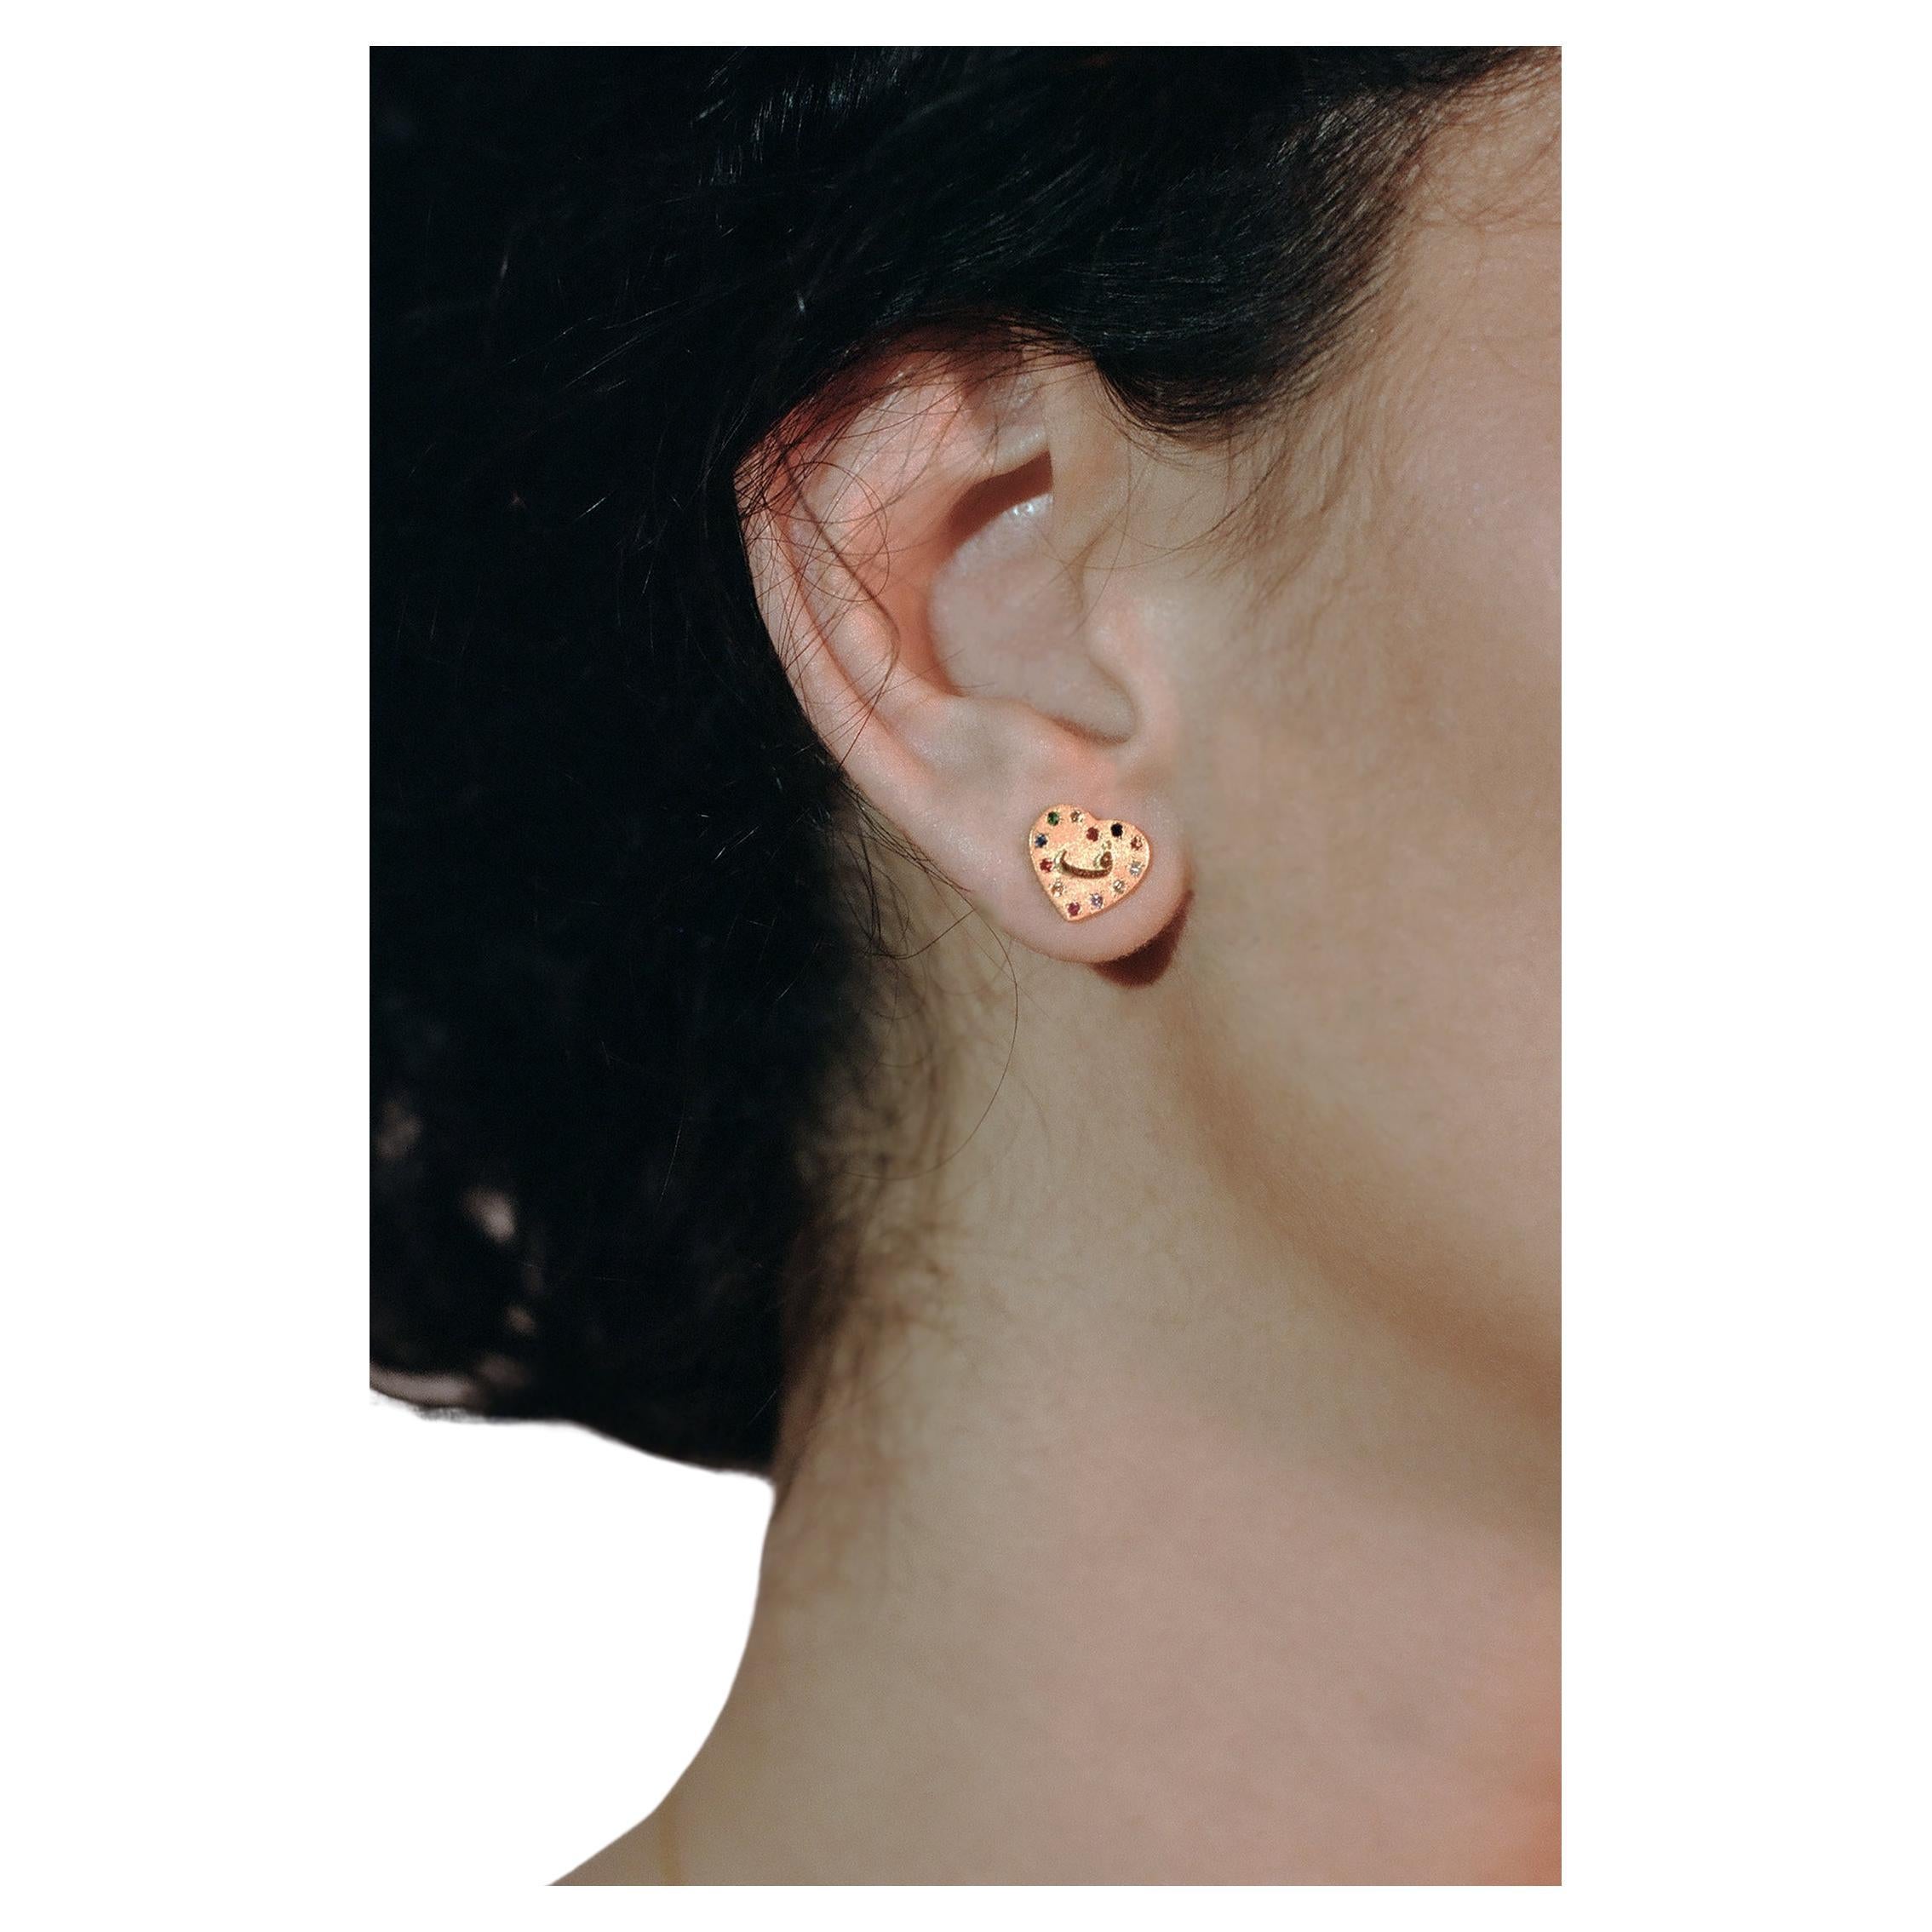 Heart shaped white Gold adjustable Earrings. For Sale